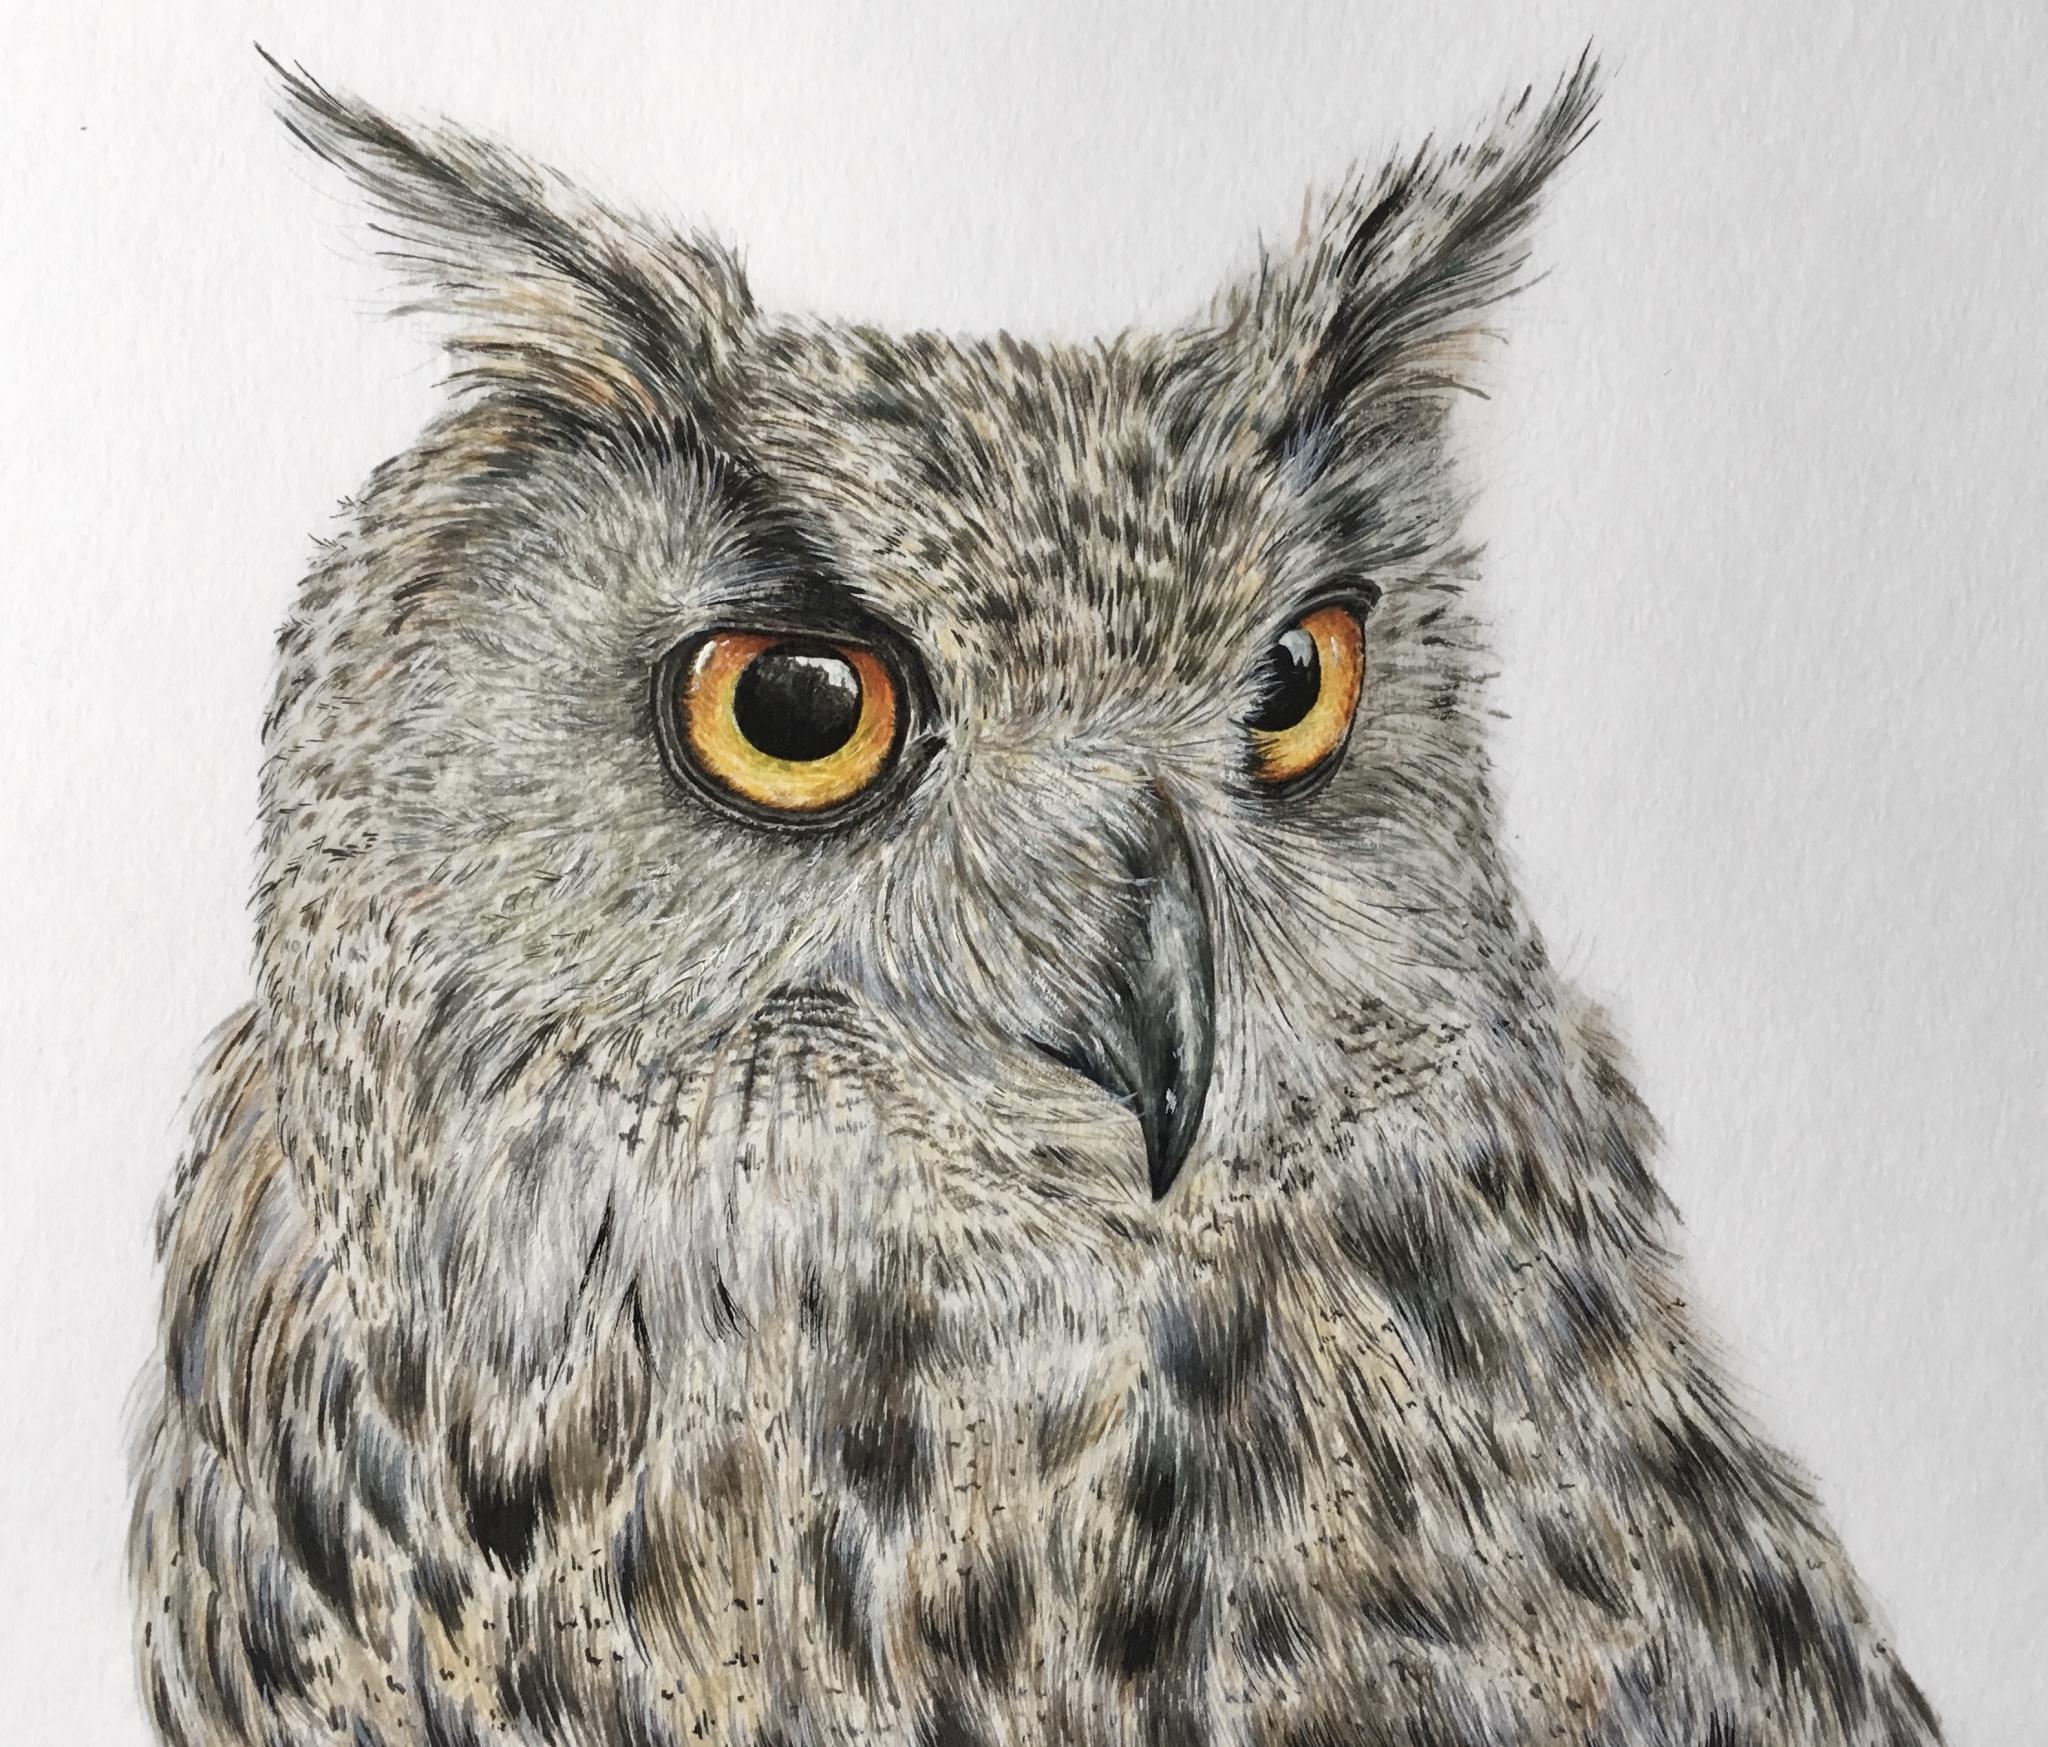 Charlotte Marlow’s owl